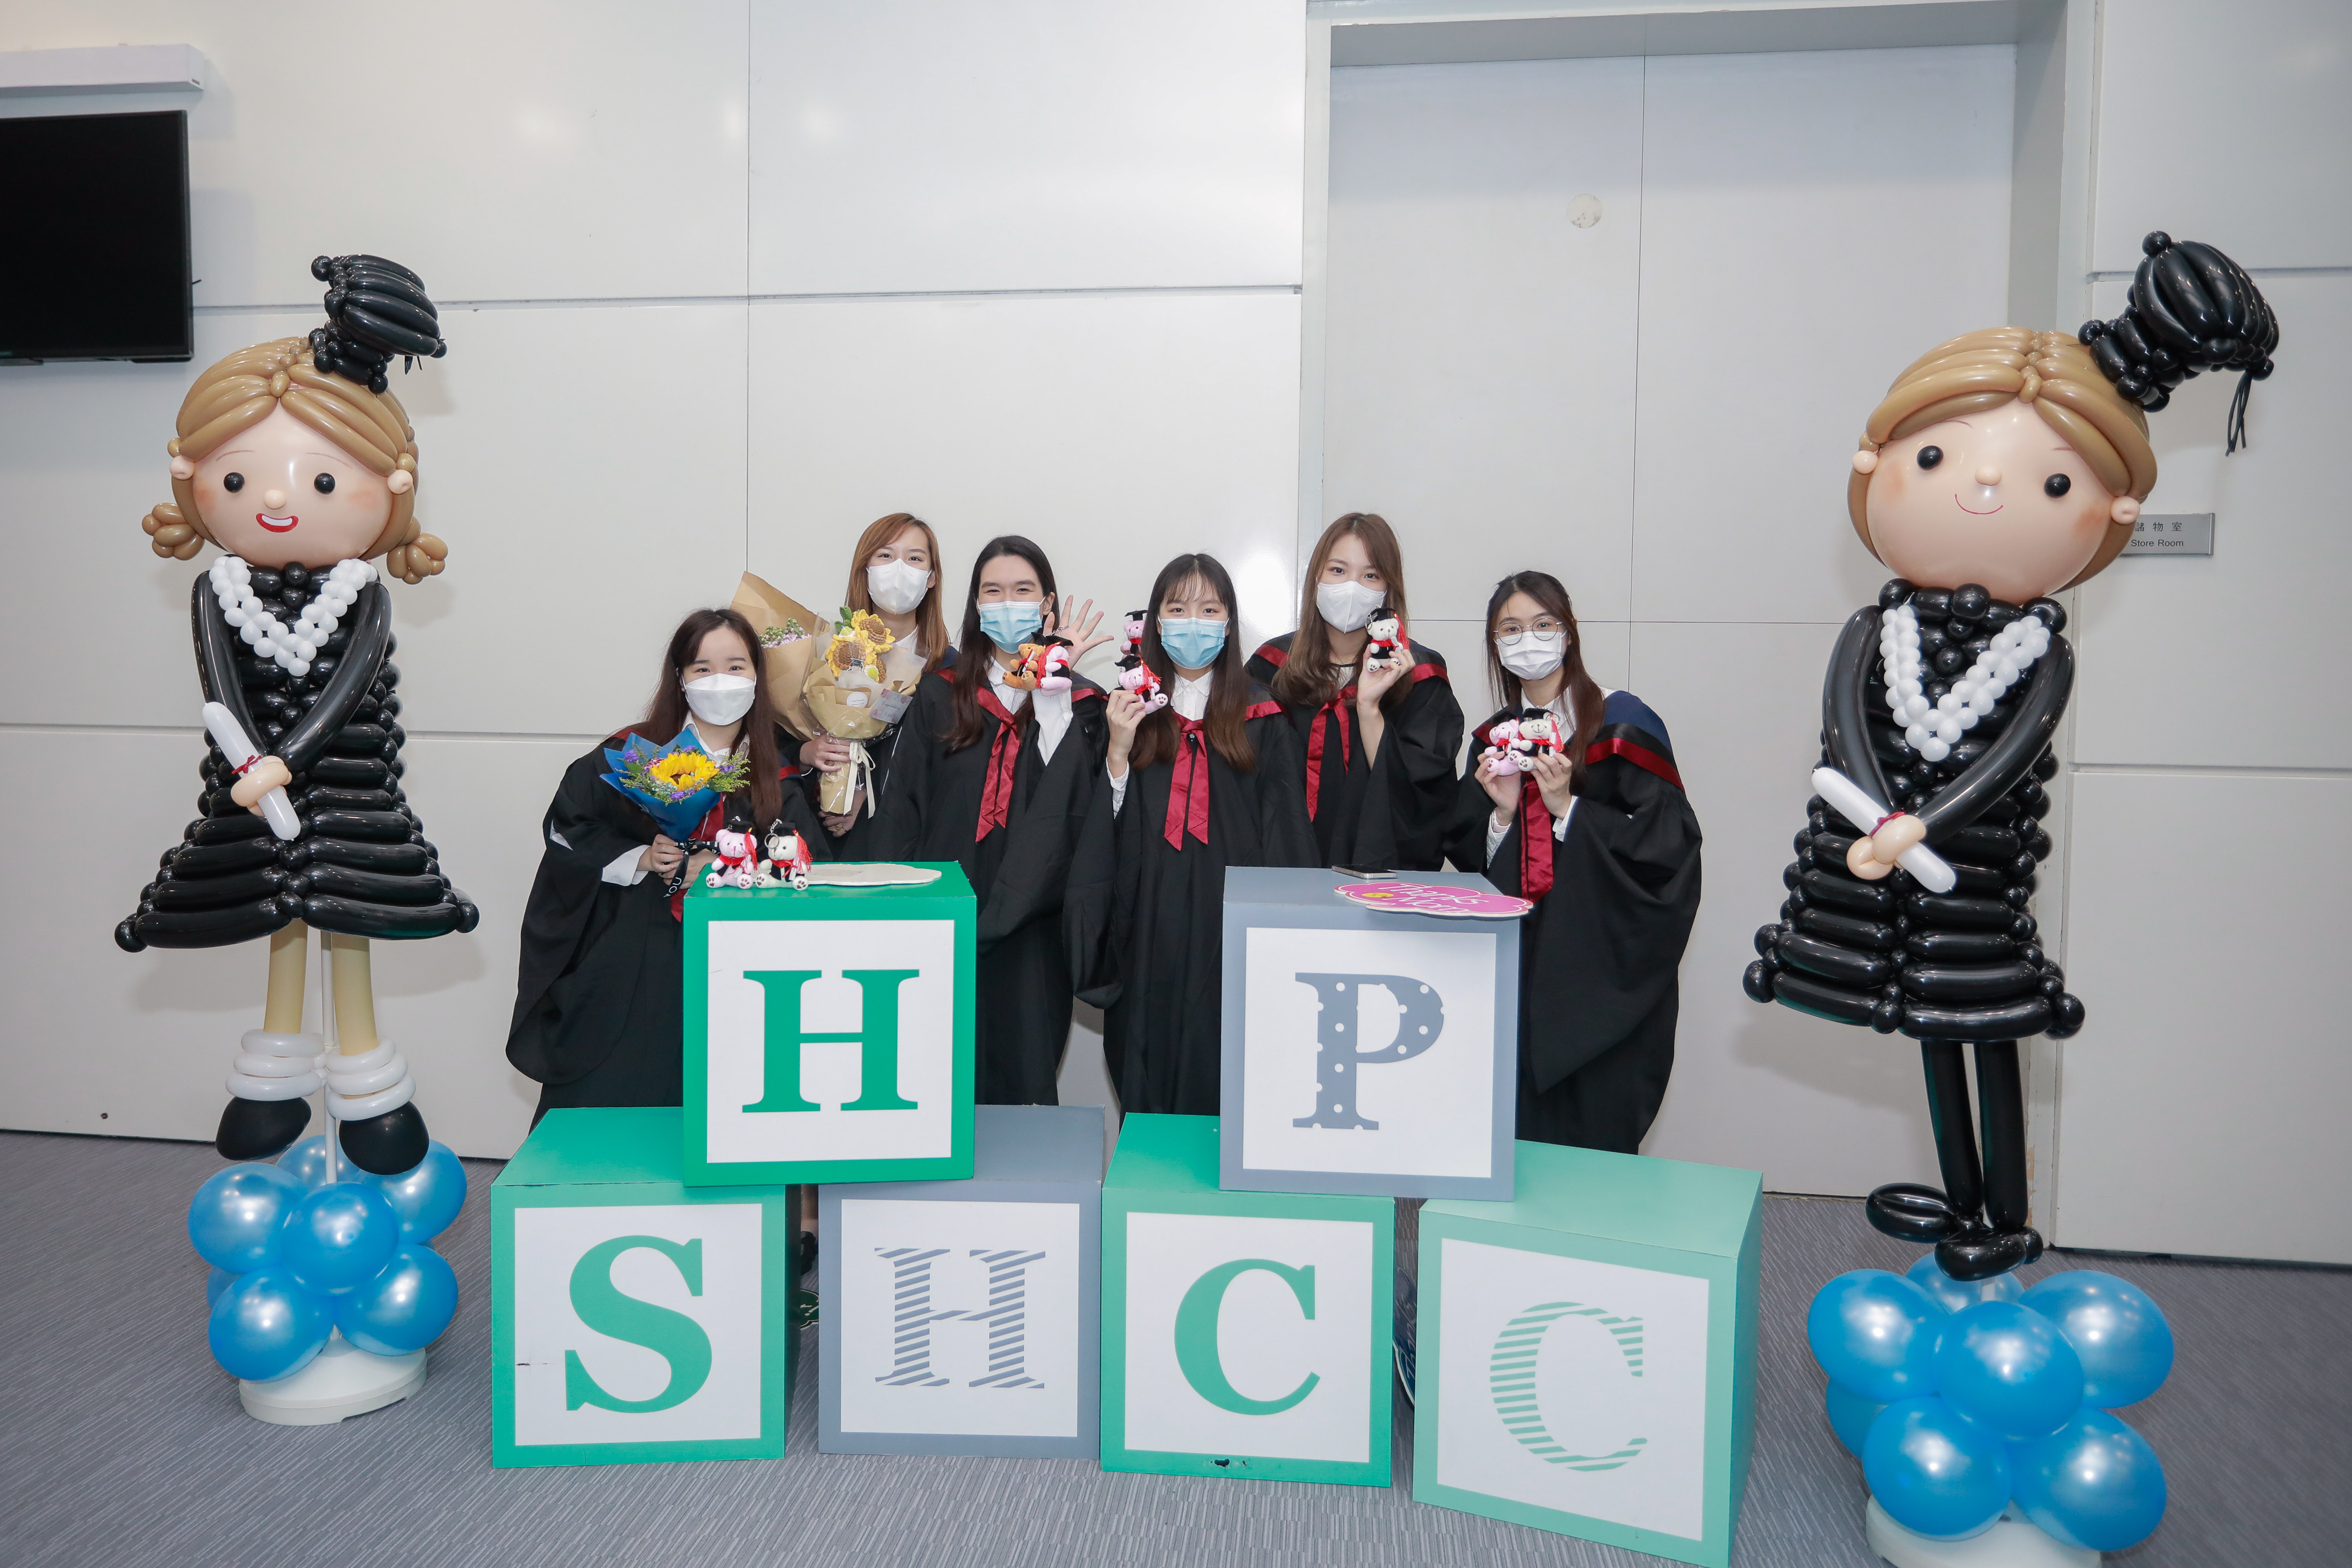 HPSHCC - The 14th Graduation Ceremony - Photo - 11